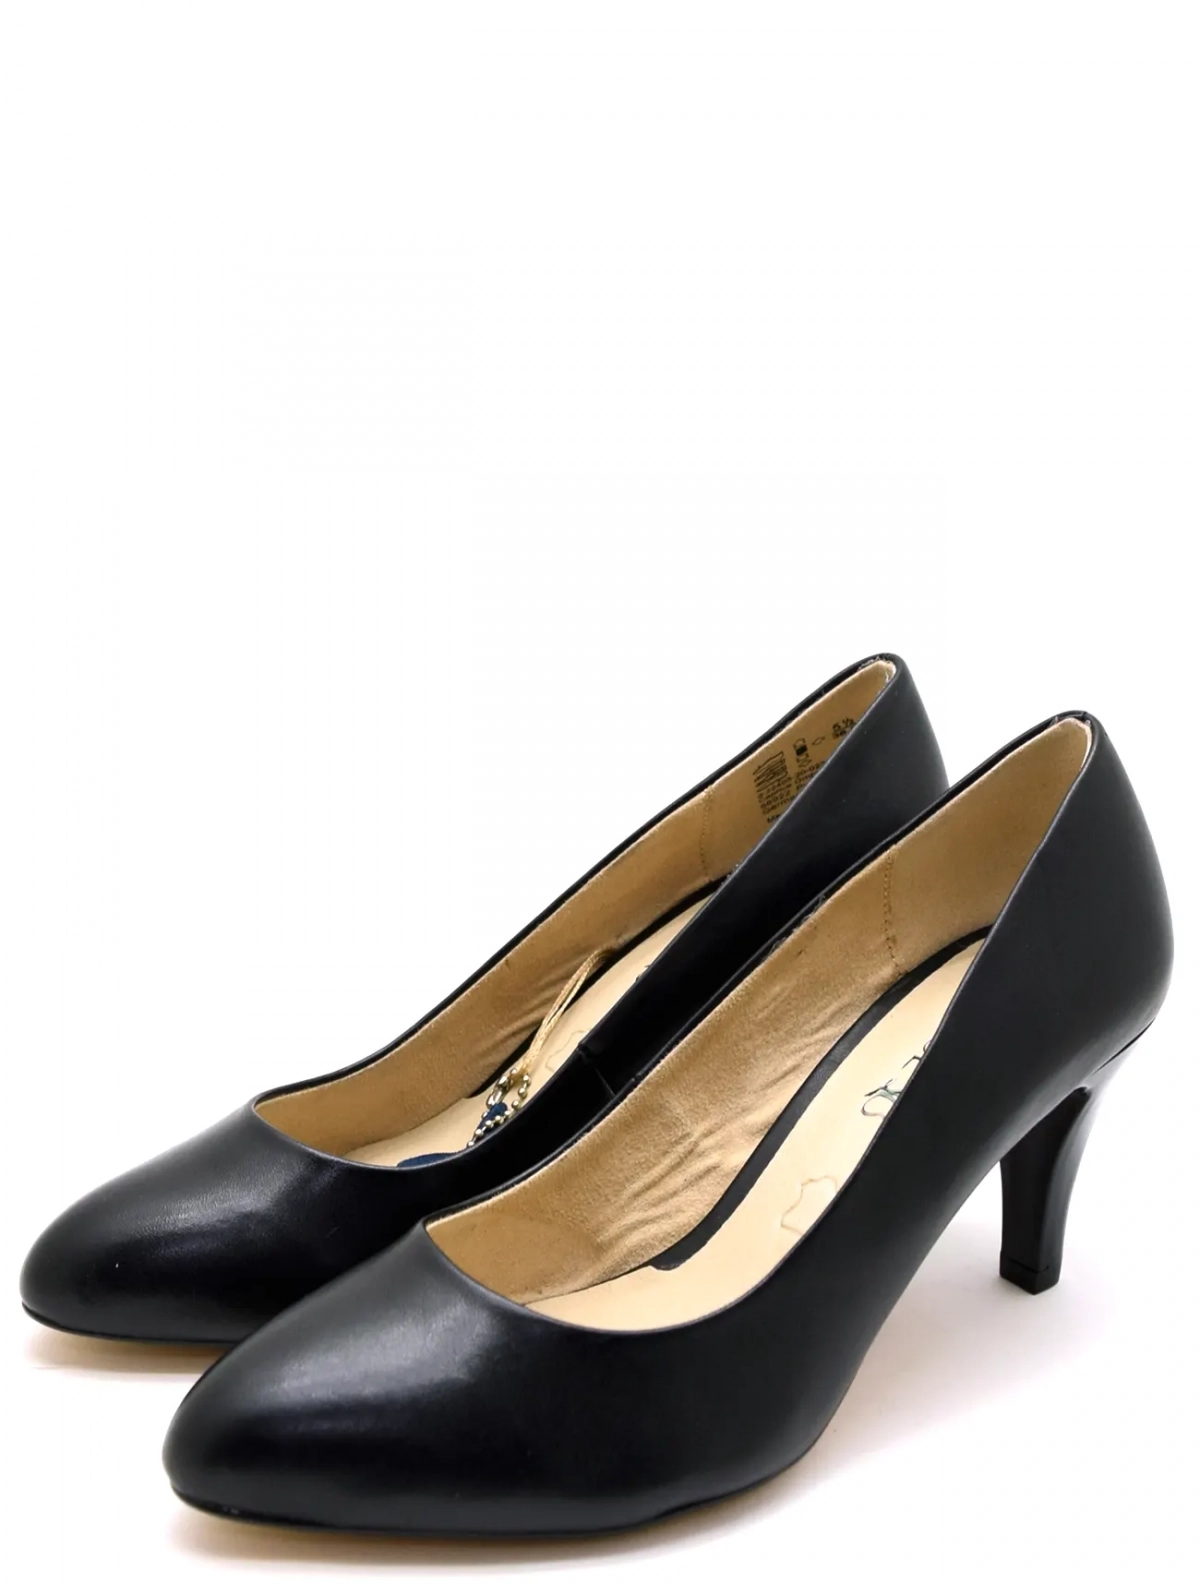 Caprice 9-22405-20-022 женские туфли